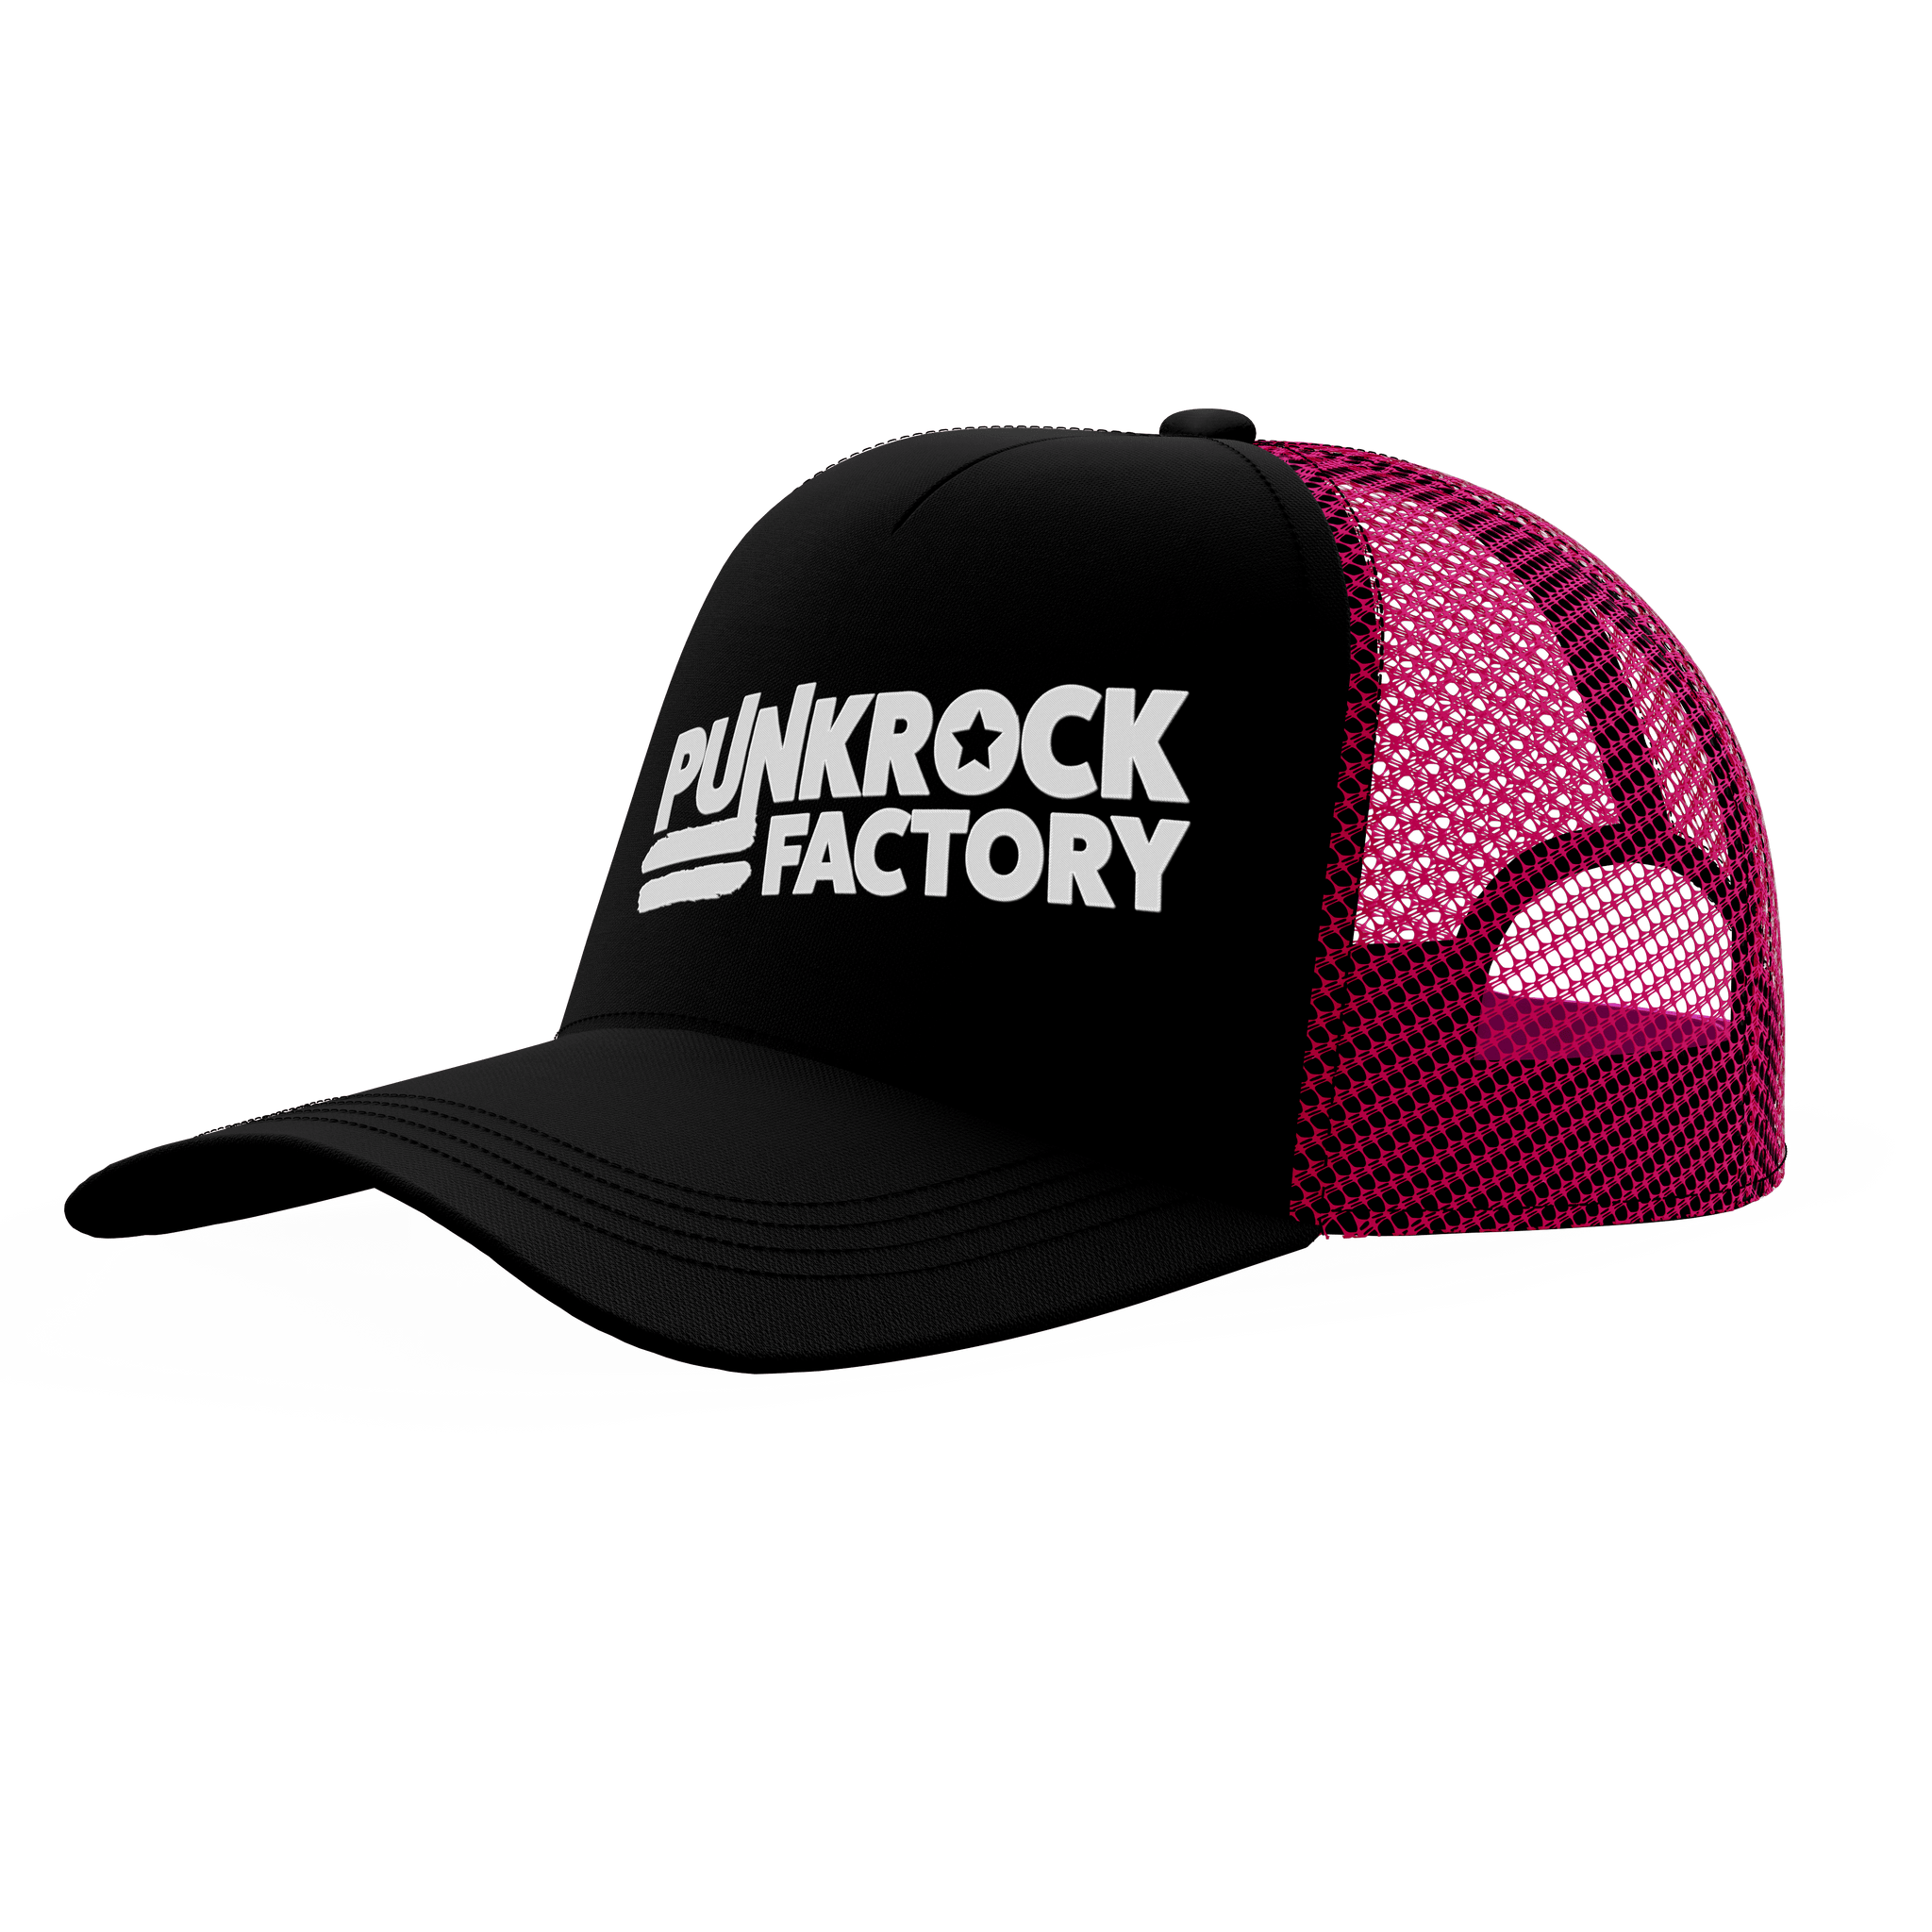 PRF Trucker Punk Rock Factory Black/Pink 